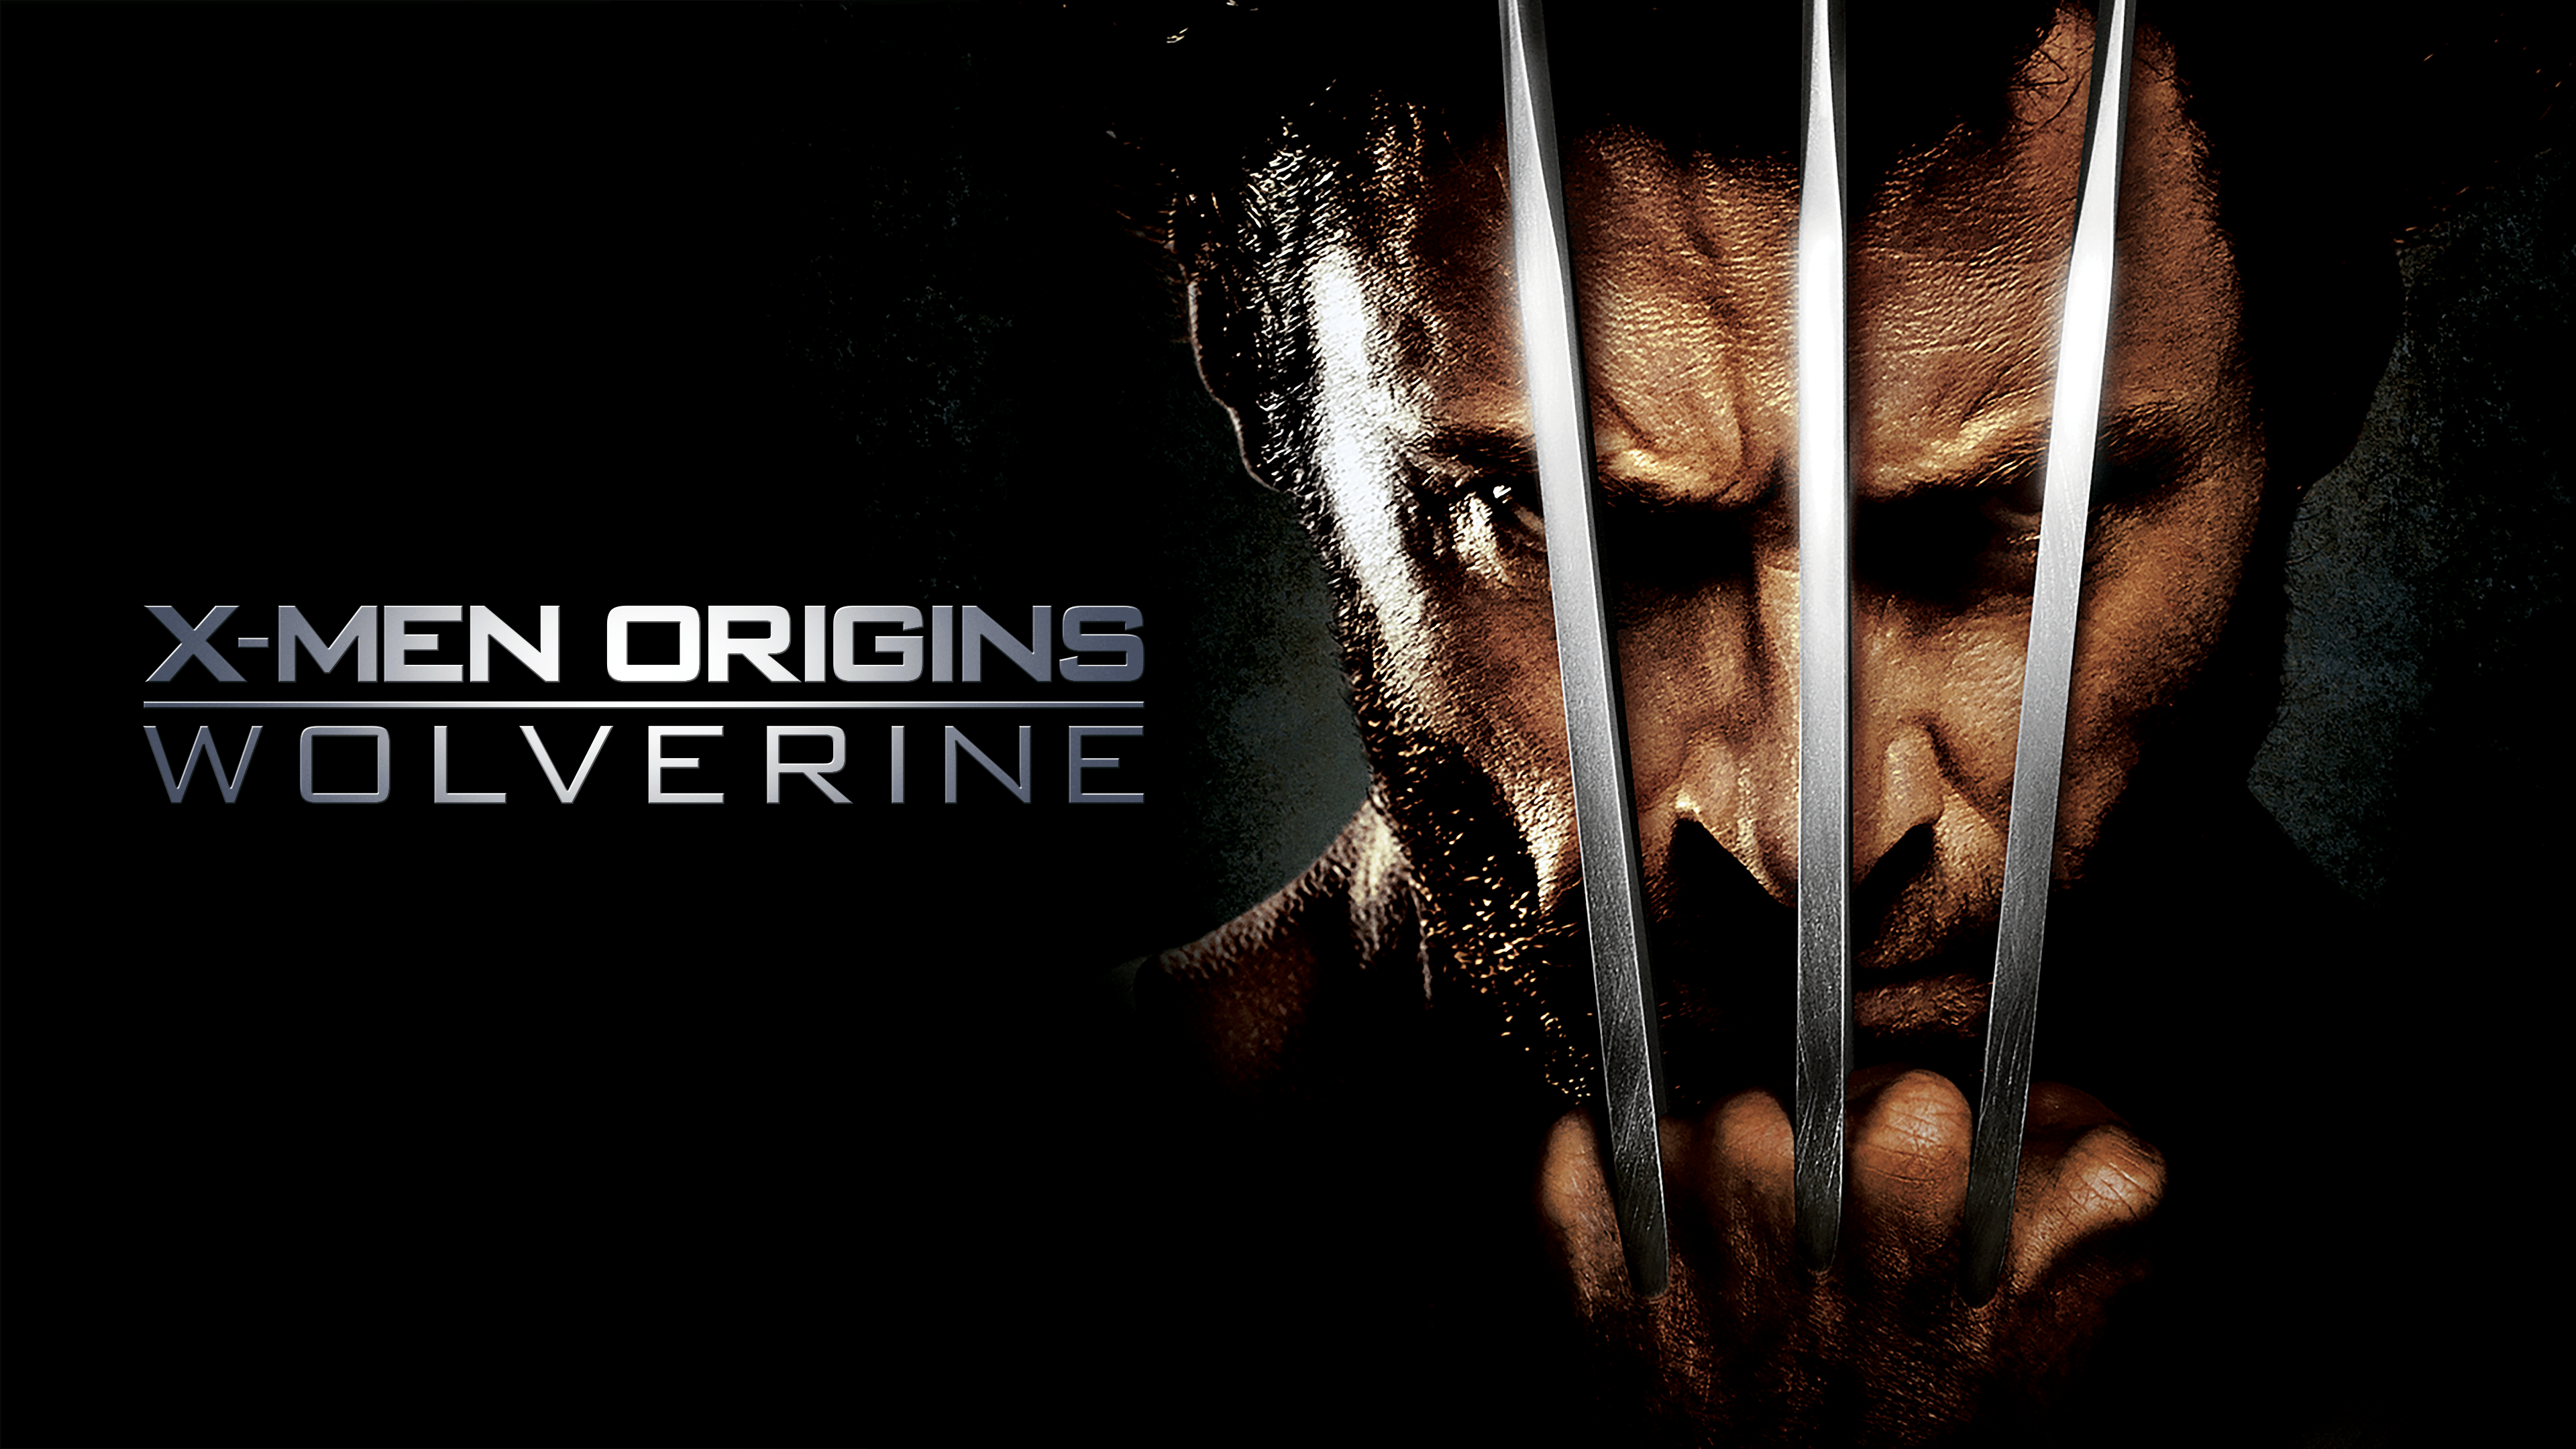 Росомаха люди х. X-men Origins: Wolverine 2009. X-men Origins: Wolverine (2009) игра обложка. Росомаха x men игра. Длс икс